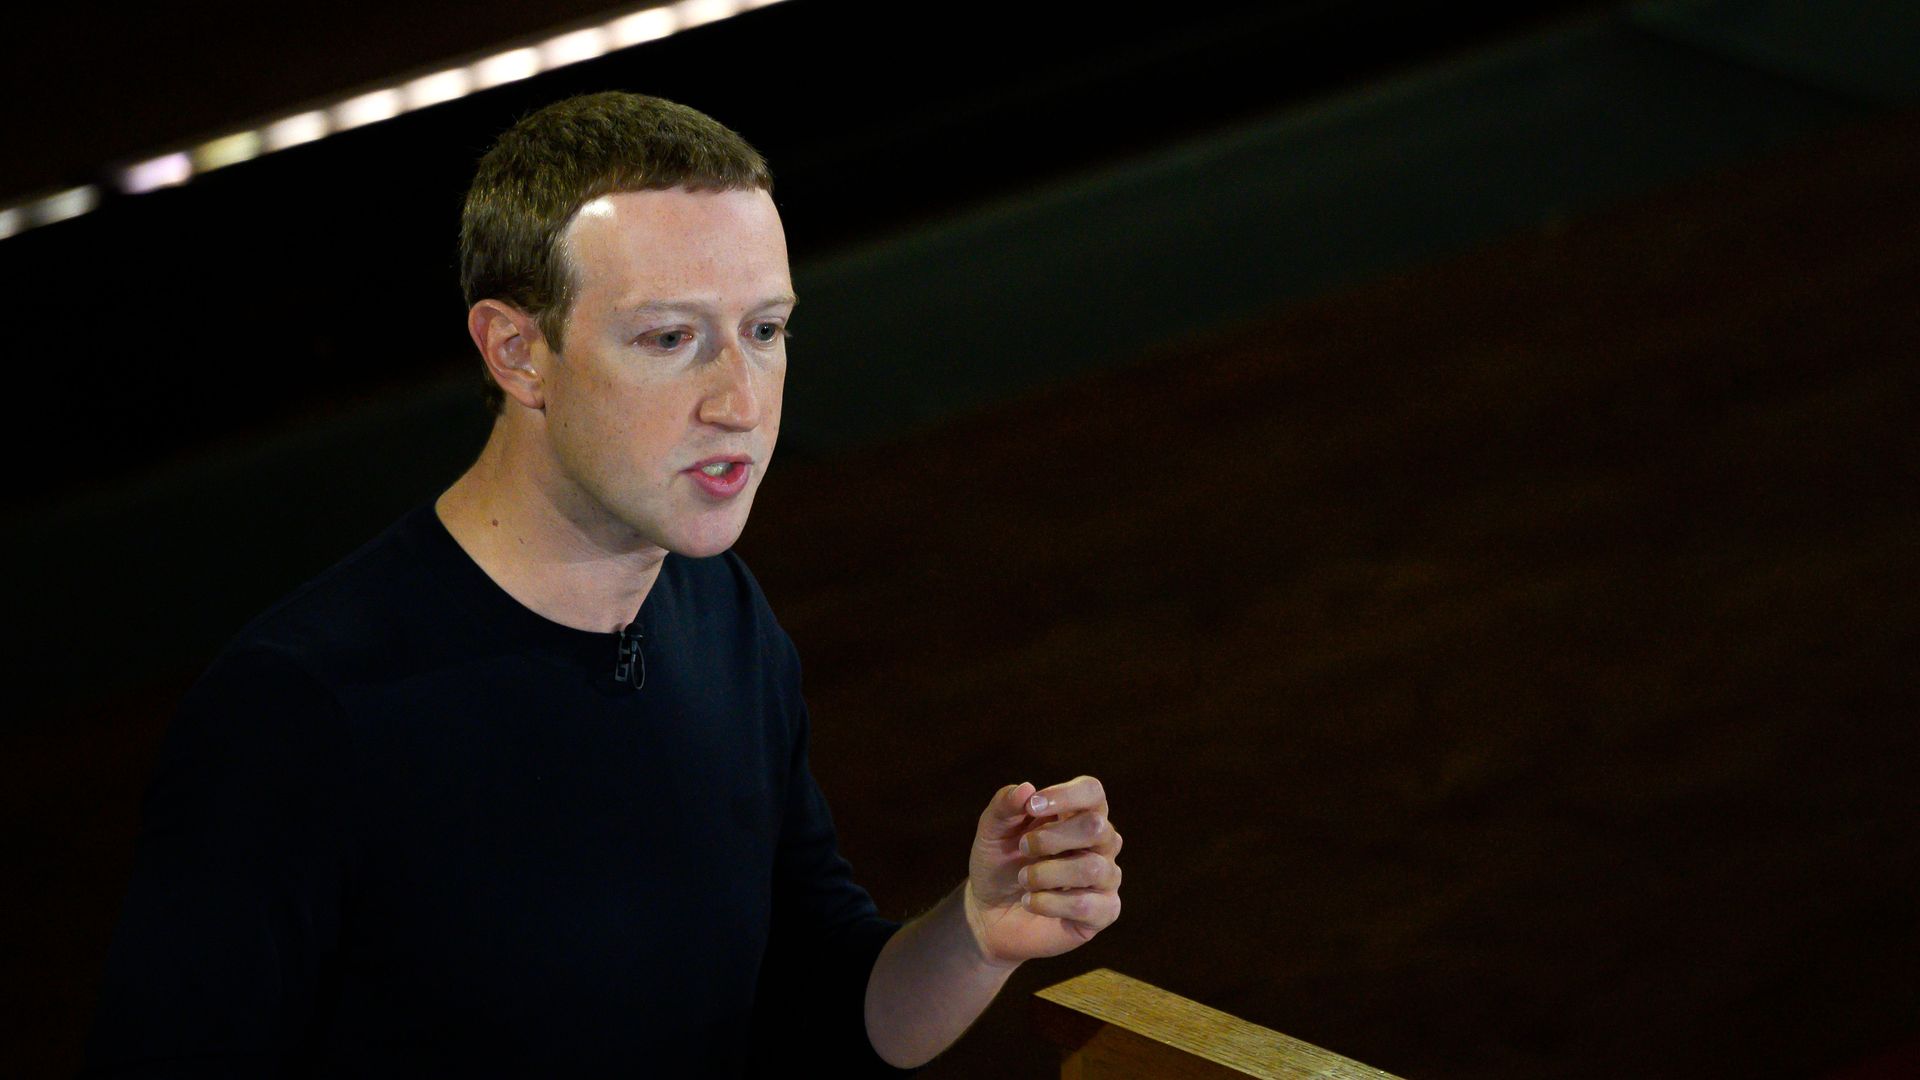 Photo of Mark Zuckerberg Facebook's CEO speaking at Georgetown University